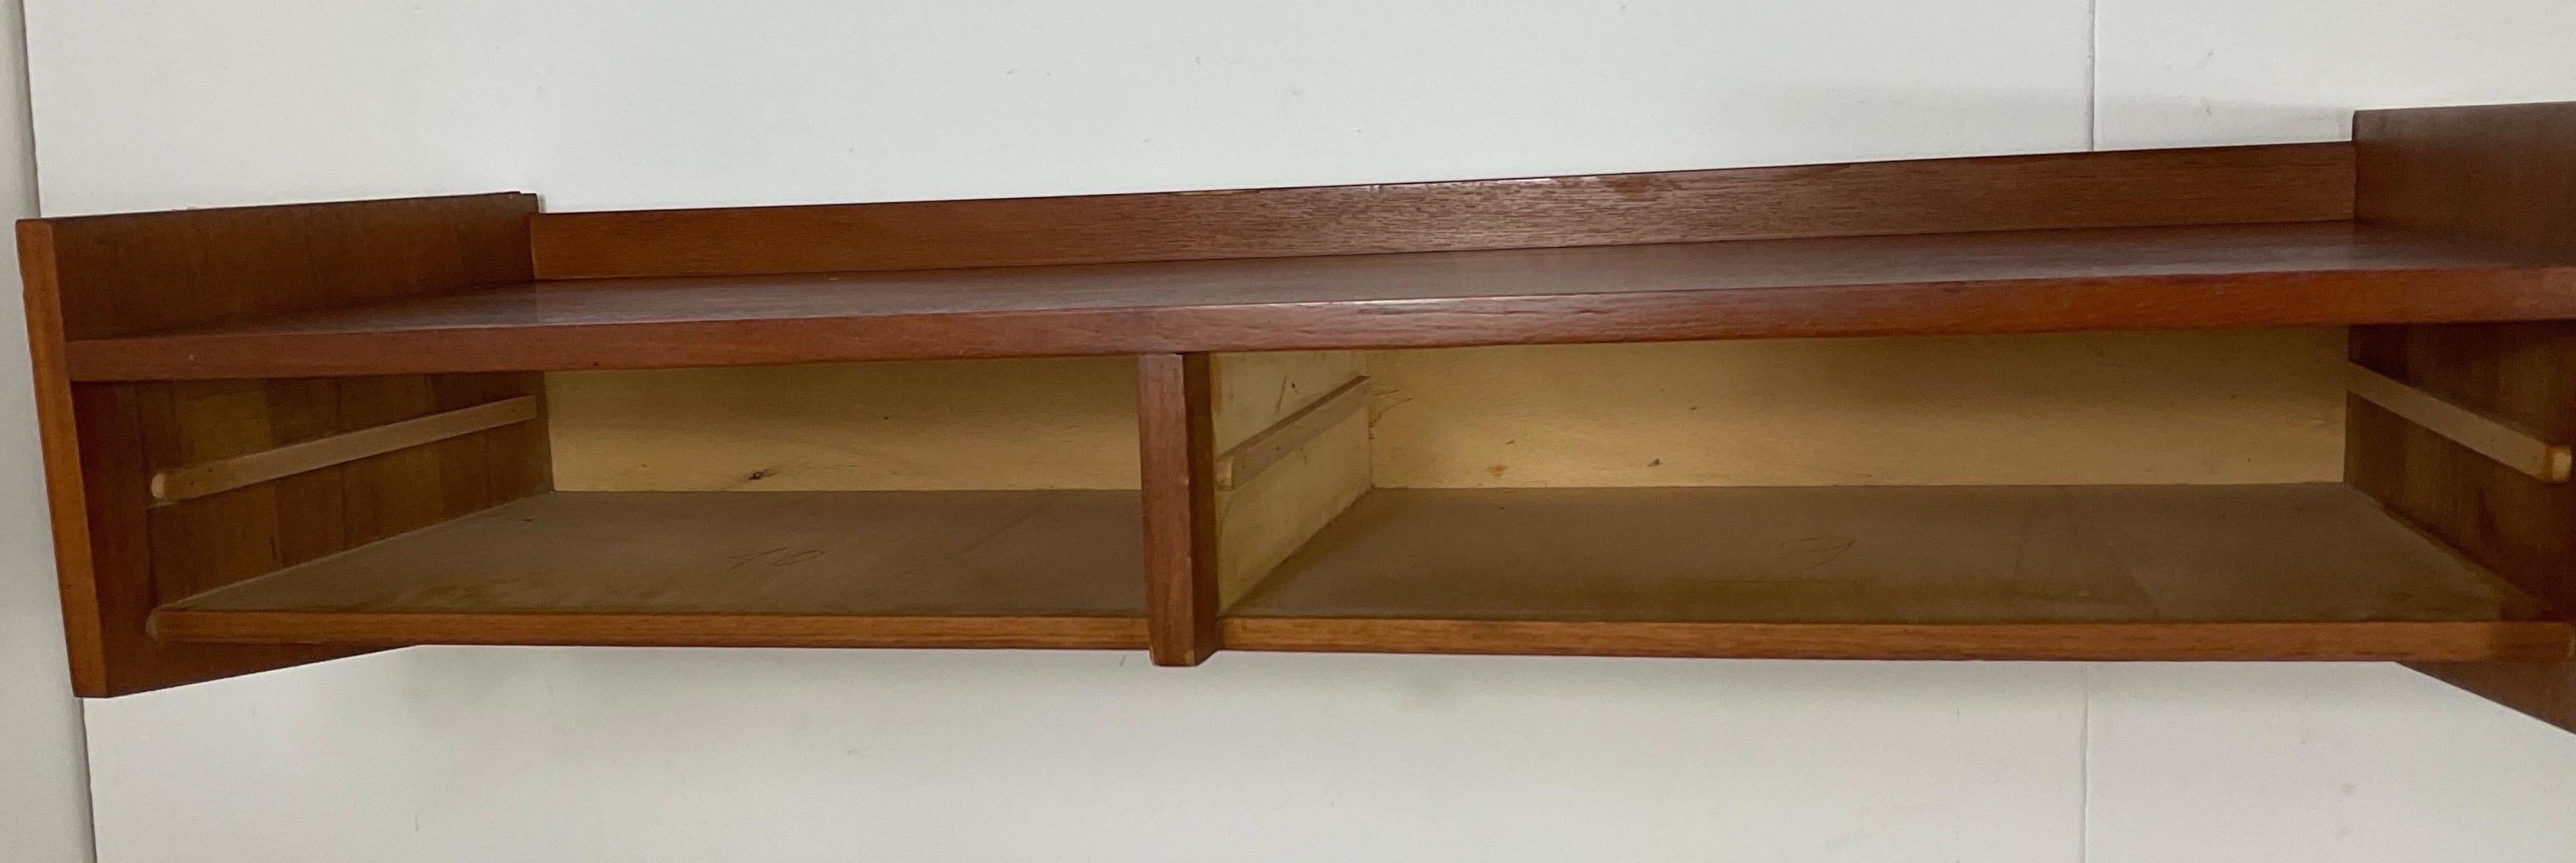 Furted wood wall console attributable to Osvaldo Borsani For Sale 1